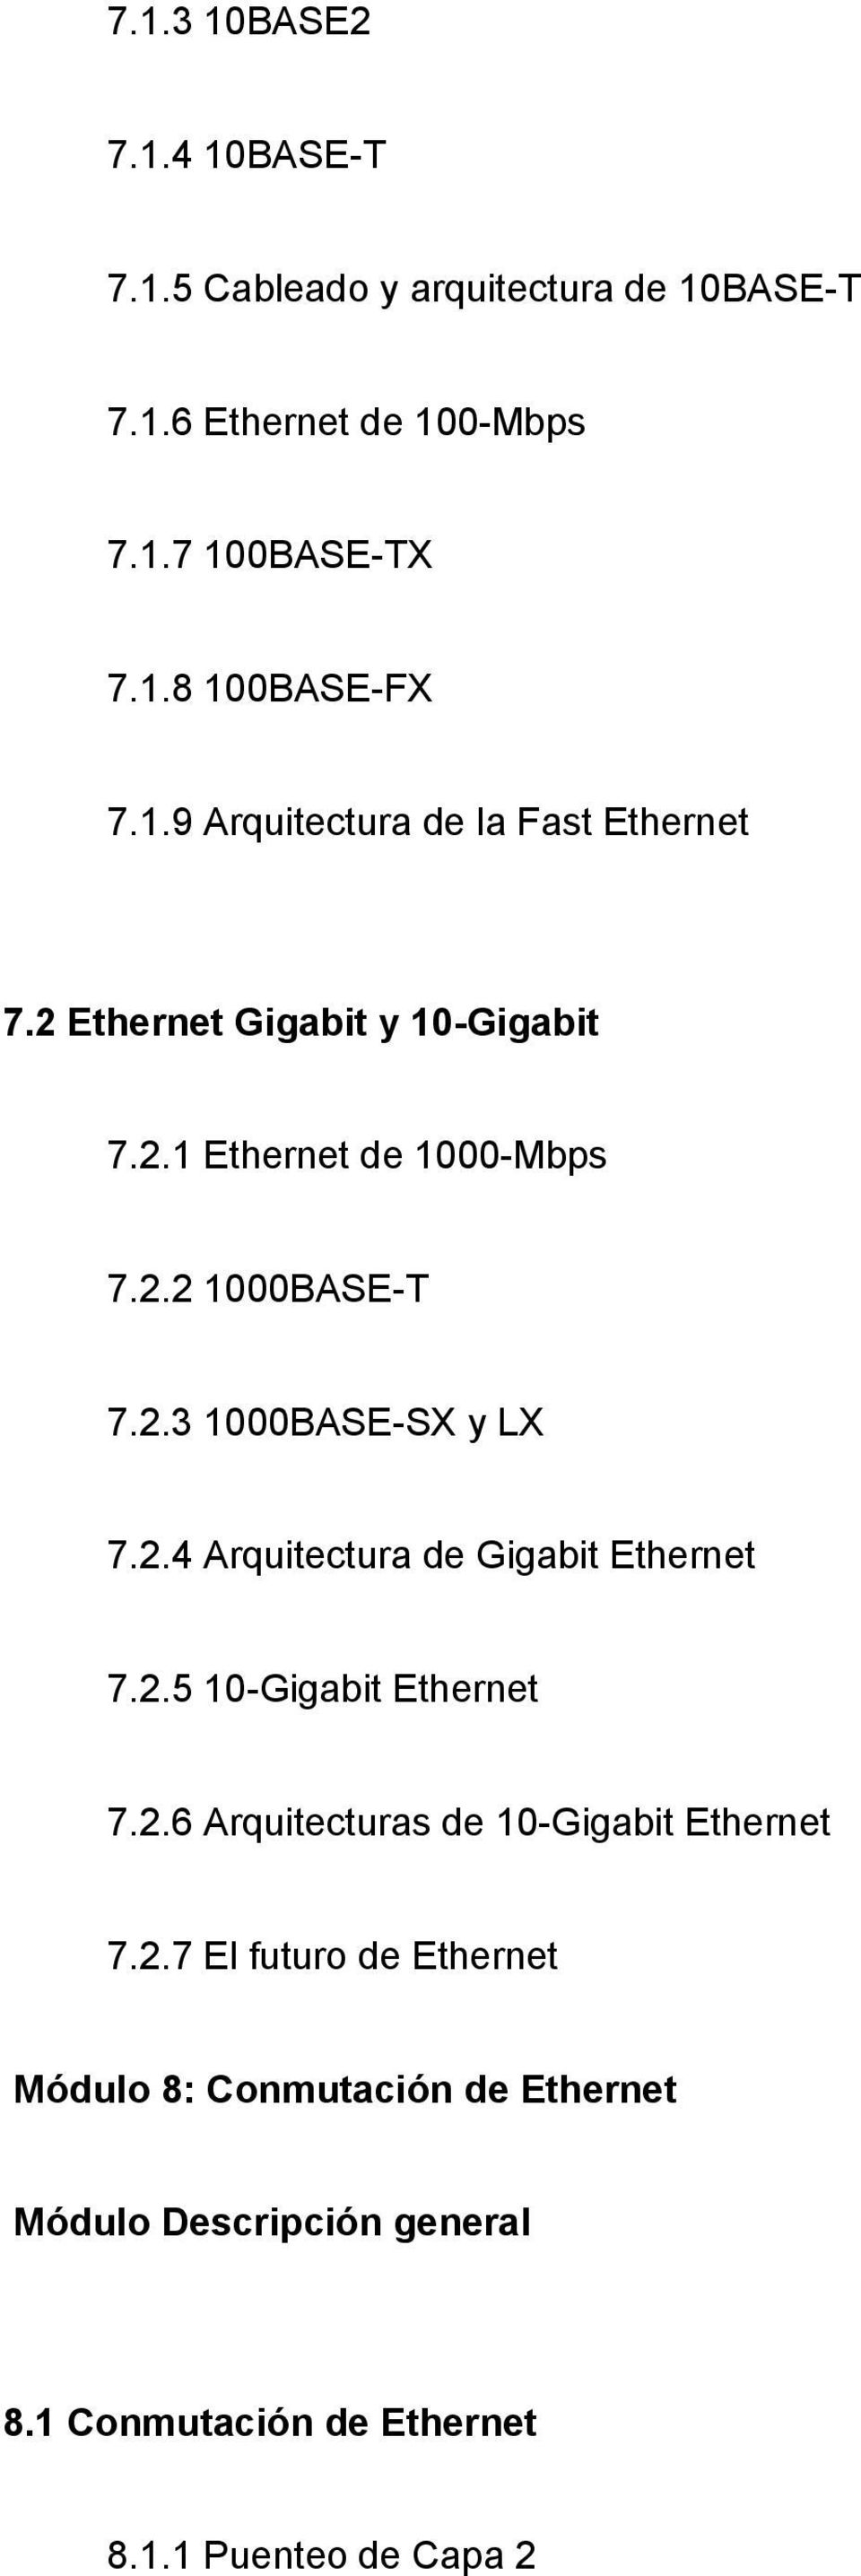 2.4 Arquitectura de Gigabit Ethernet 7.2.5 10-Gigabit Ethernet 7.2.6 Arquitecturas de 10-Gigabit Ethernet 7.2.7 El futuro de Ethernet Módulo 8: Conmutación de Ethernet 8.